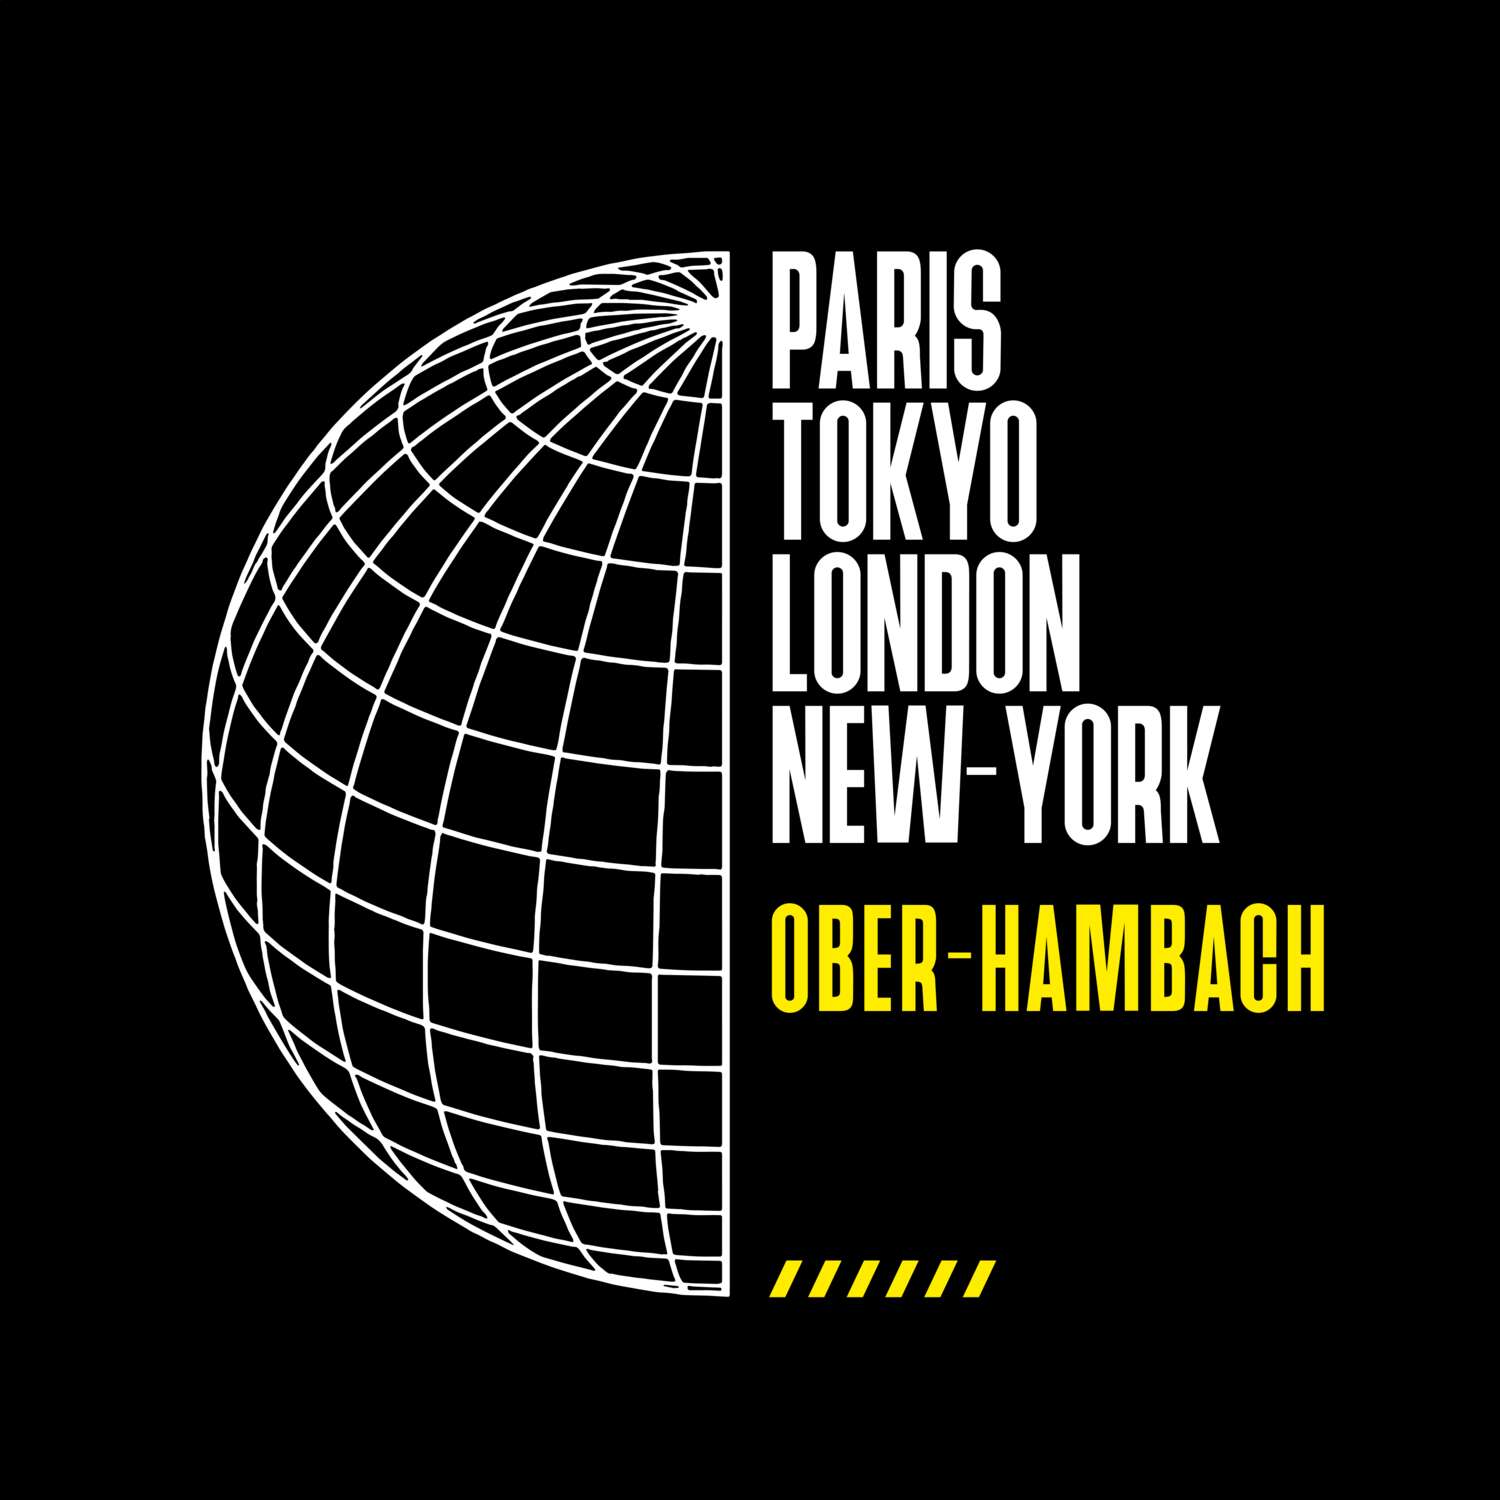 Ober-Hambach T-Shirt »Paris Tokyo London«